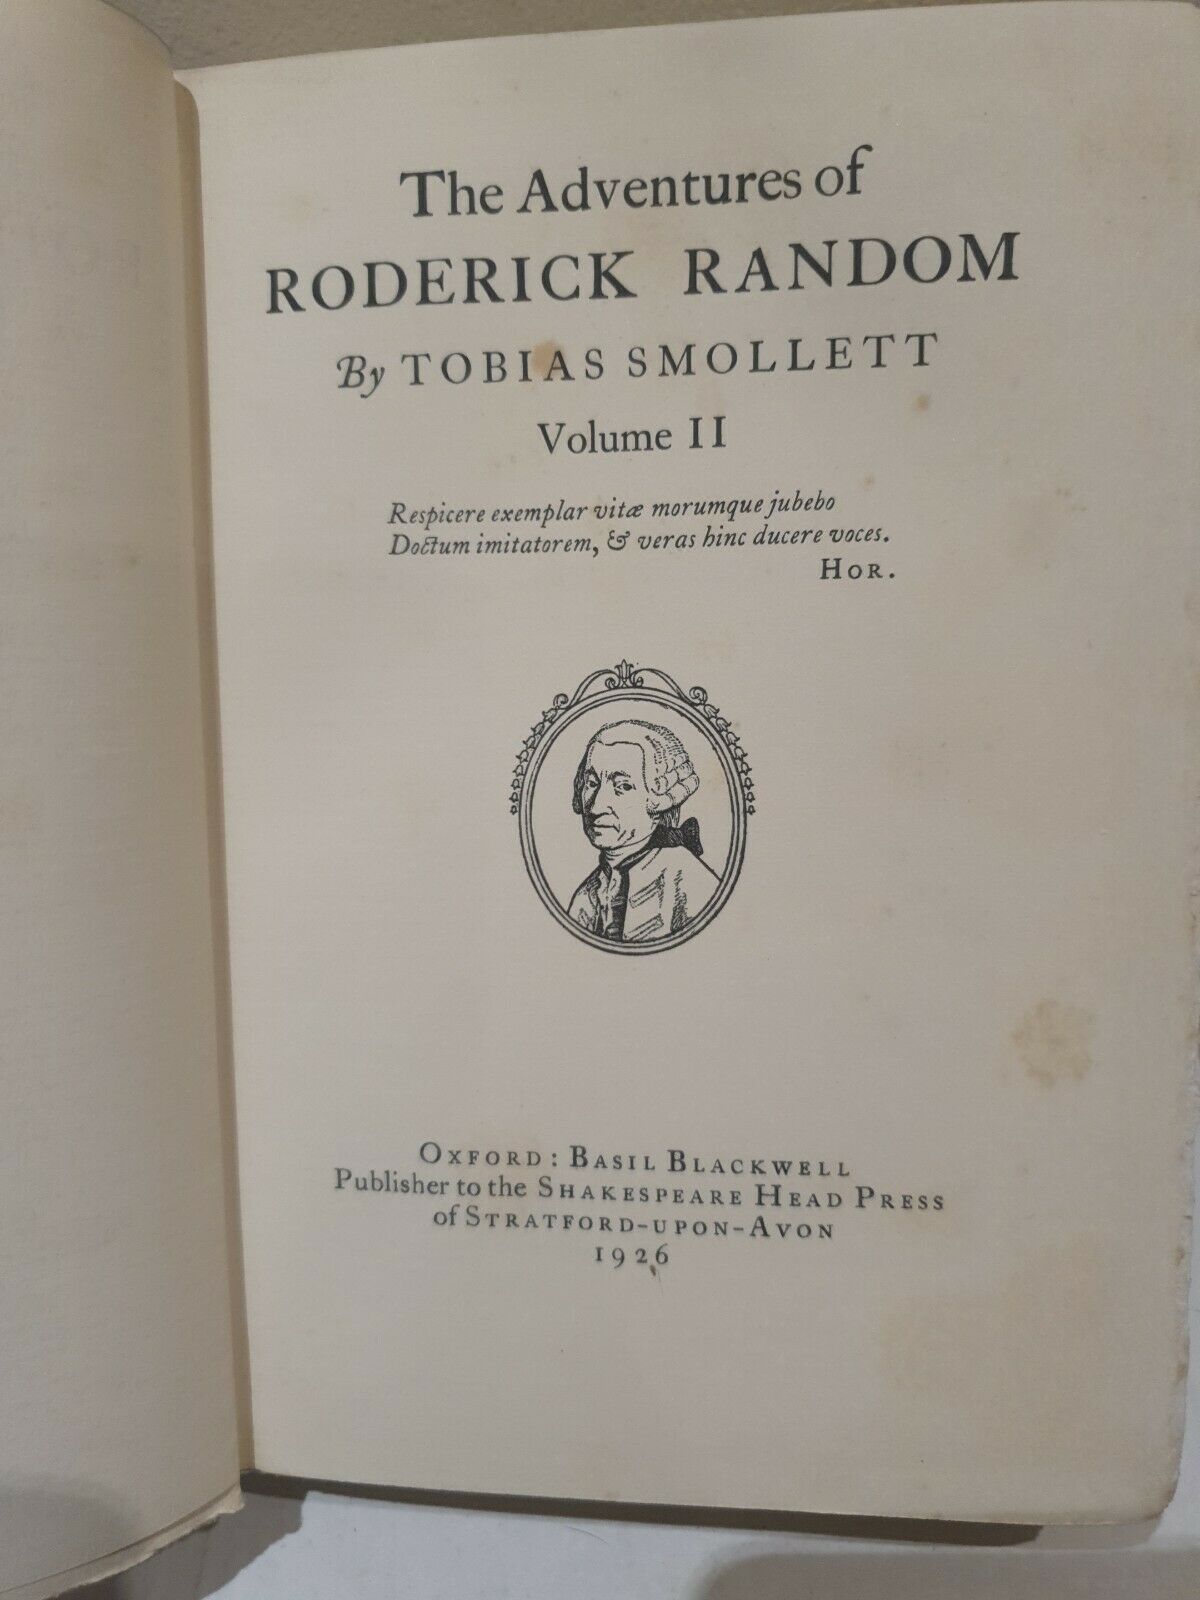 Roderick Random Volume I & II - Tobias Smollett (1926)